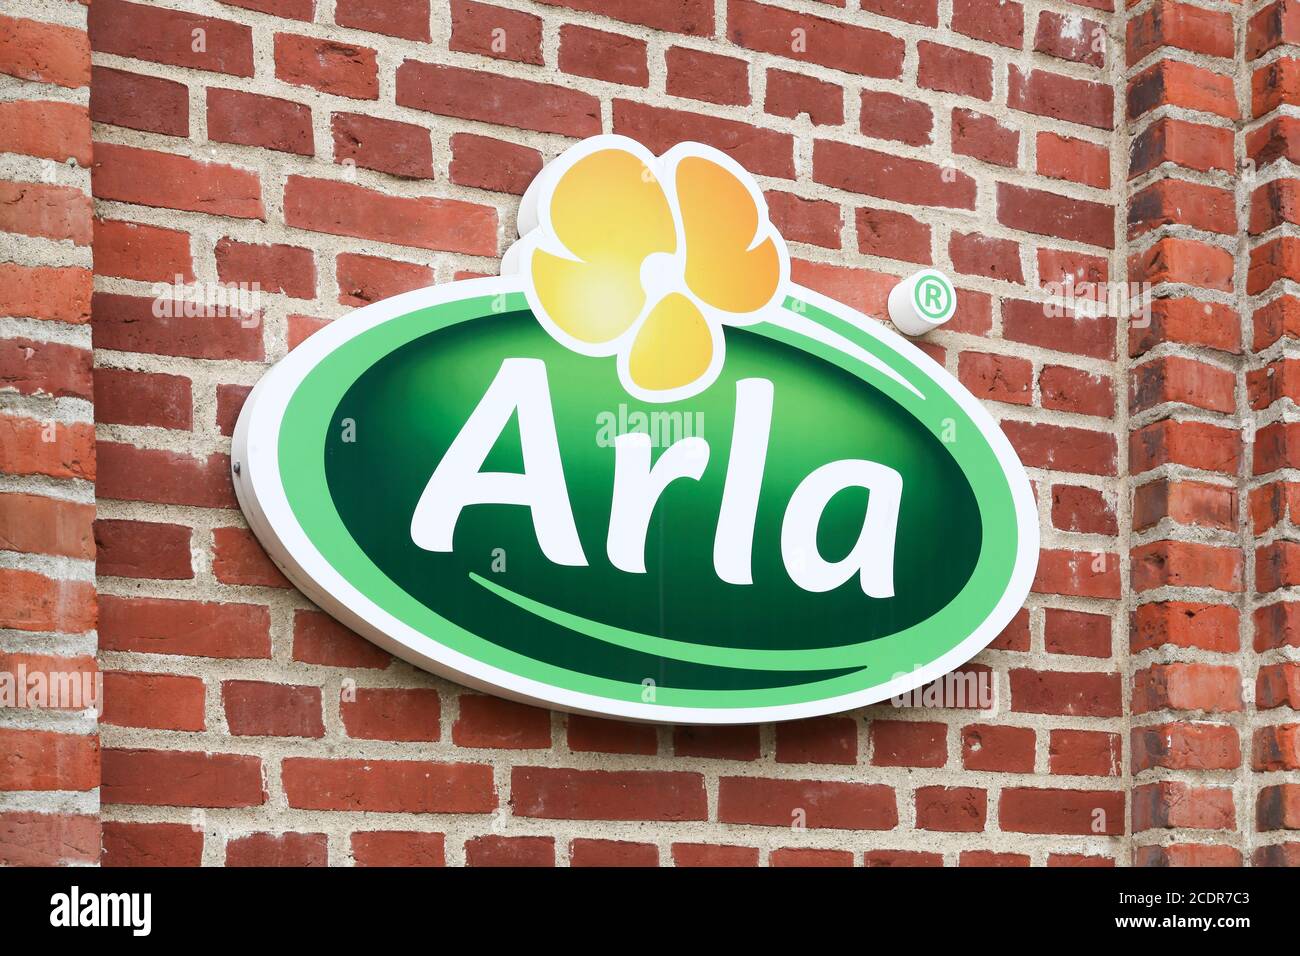 brugerdefinerede Ny mening Enlighten Aarhus, Denmark - June 5, 2019: Arla Foods logo on a brick wall. Arla Foods  is an international cooperative based in Aarhus, Denmark Stock Photo - Alamy